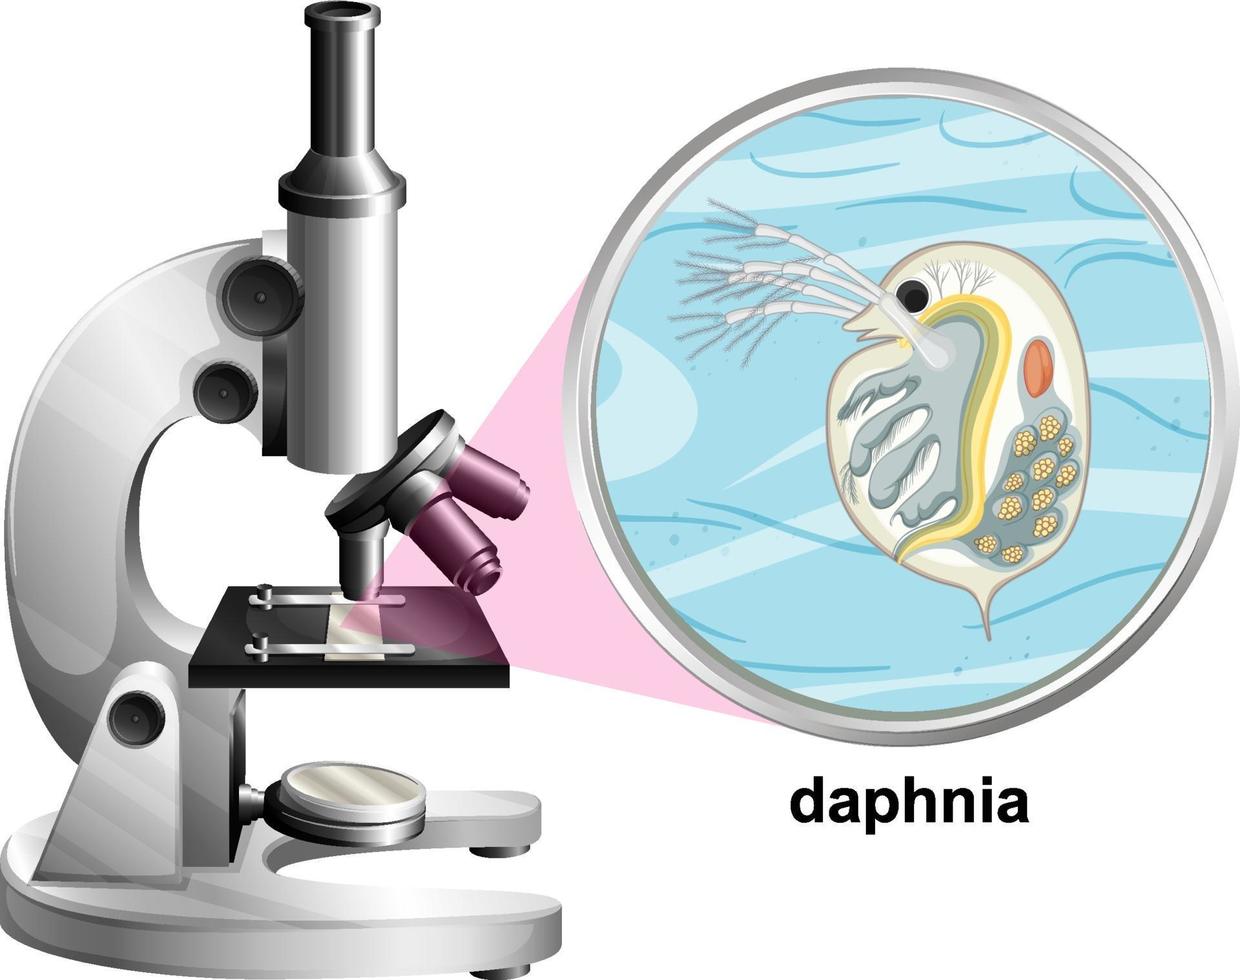 mikroskop med anatomi struktur av daphnia på vit bakgrund vektor